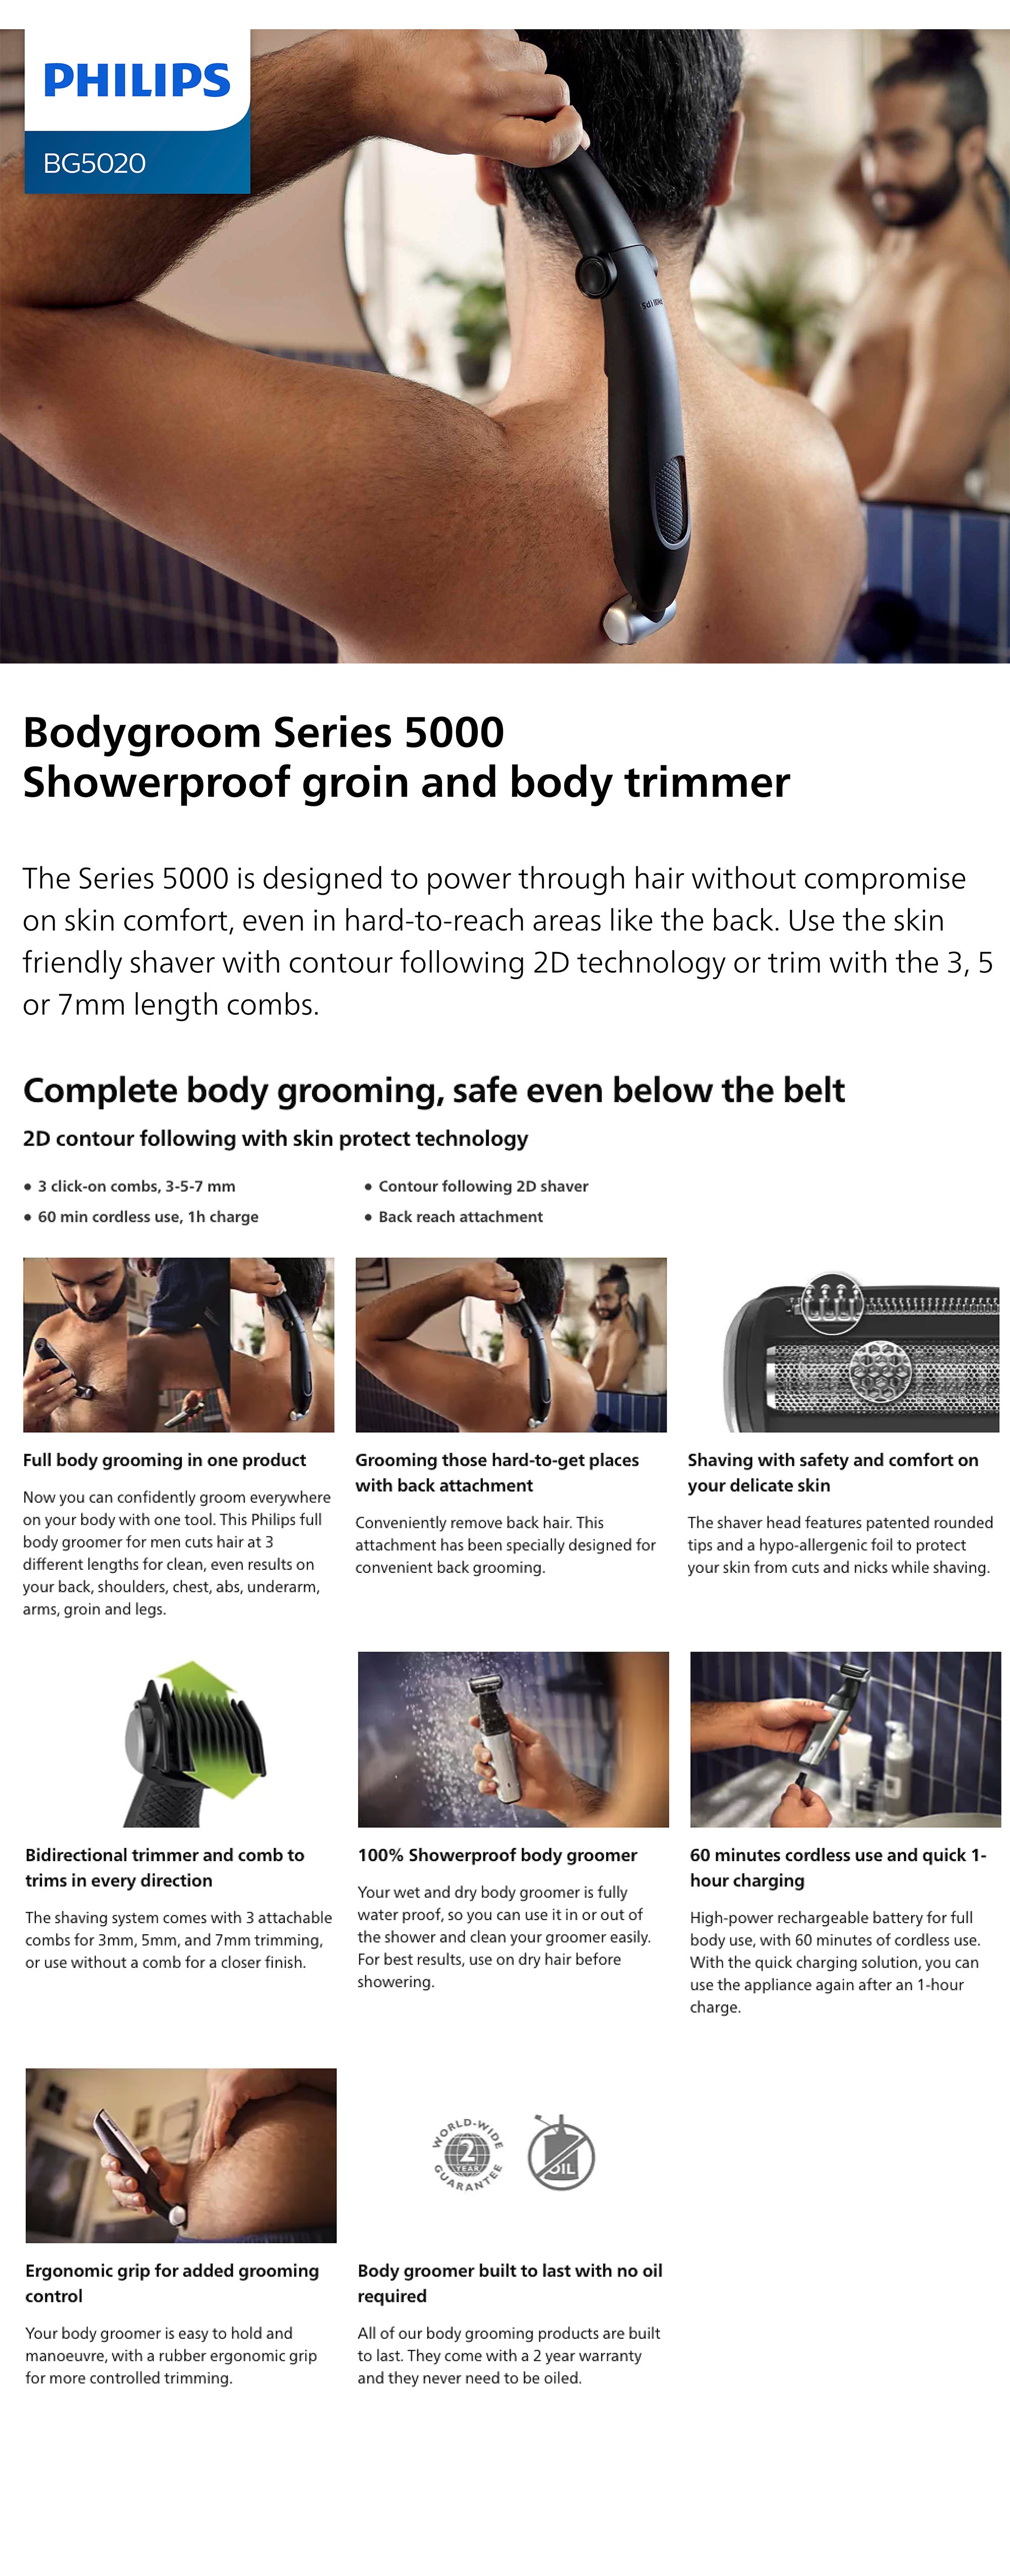 Showerproof Bodygroom Series 5000 BG5020/13, 2 Years Warranty Silver/Black